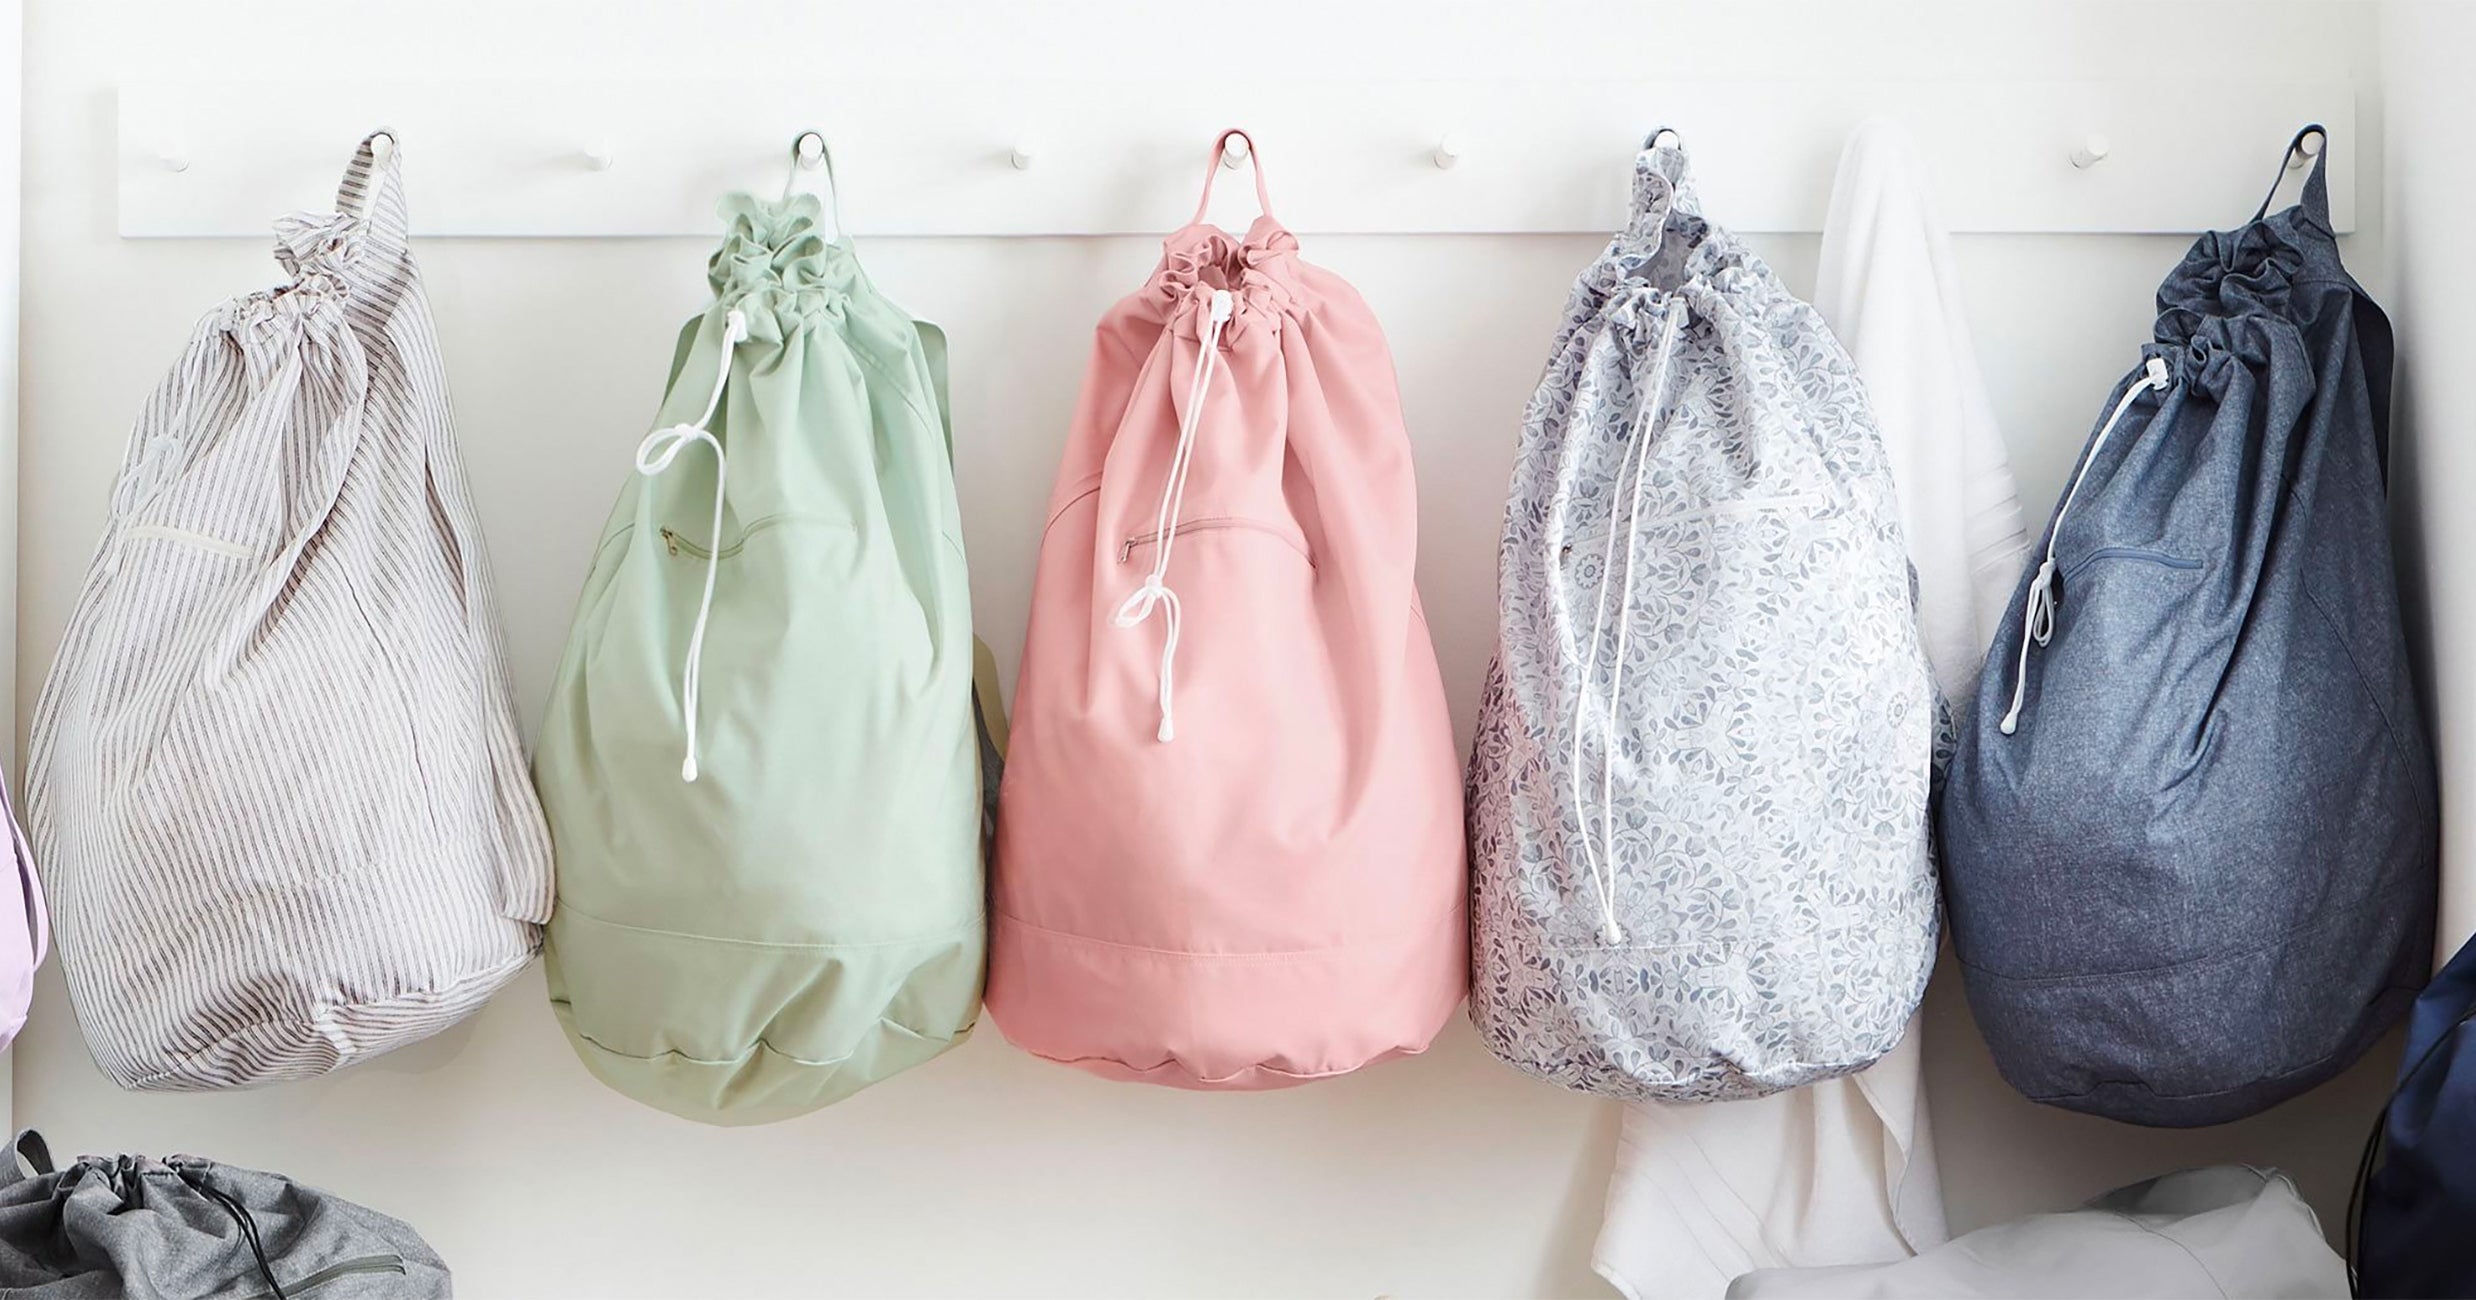 White Laundry Backpack for College Students Dorm Life Laundromat Bag  Detergent Holder